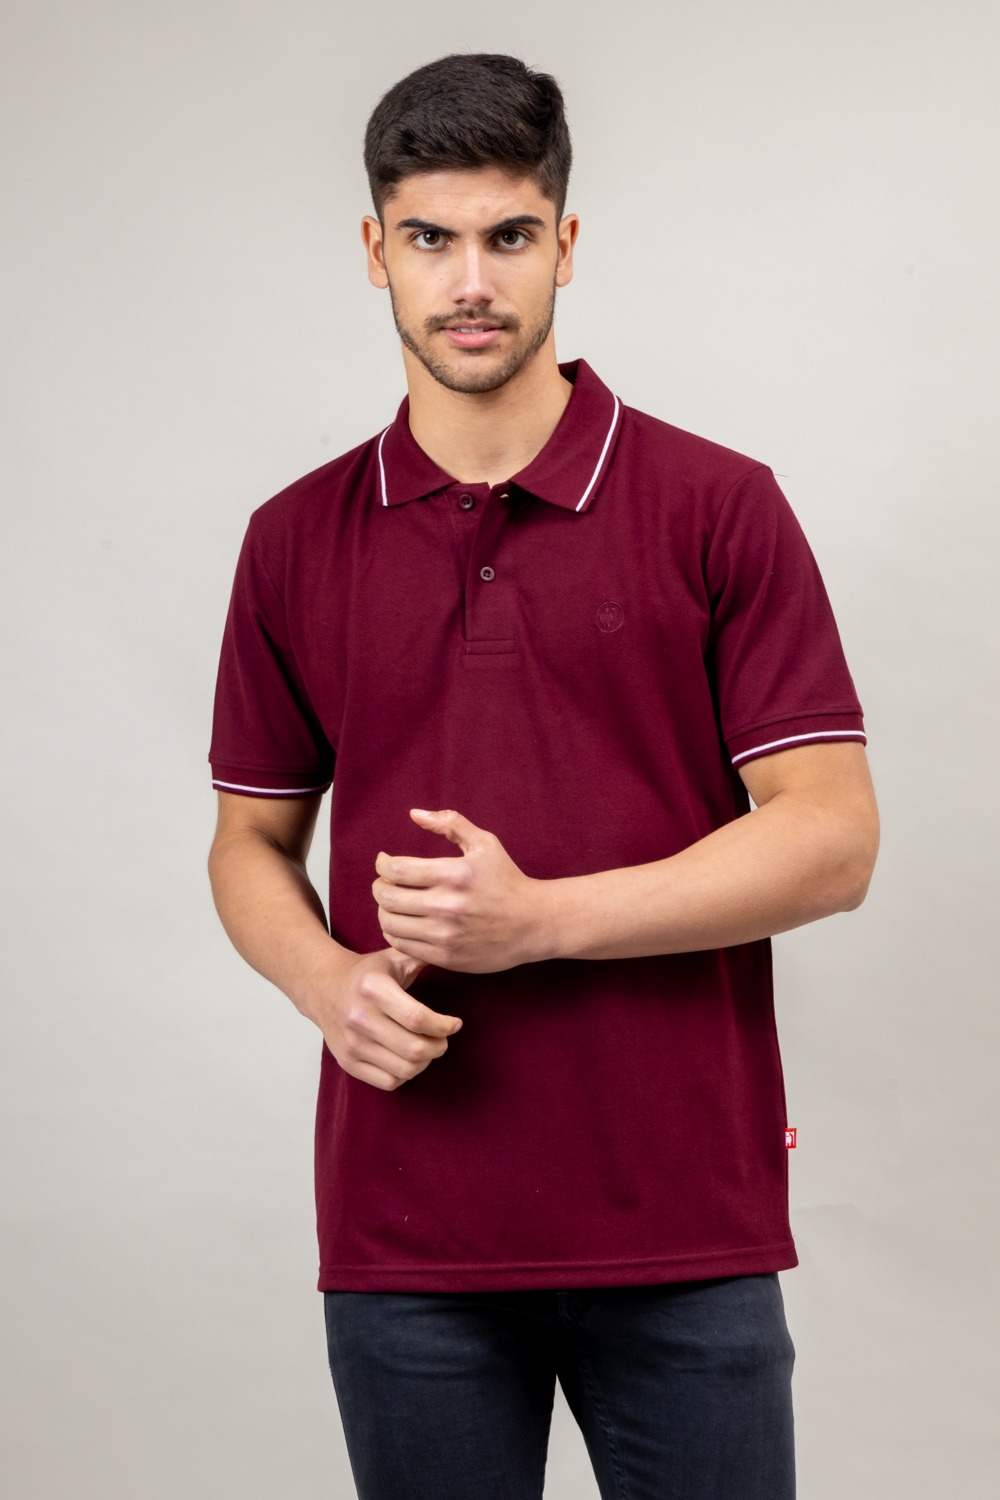 Men's Wine Half Sleeves Polo Plain Casual T-Shirt